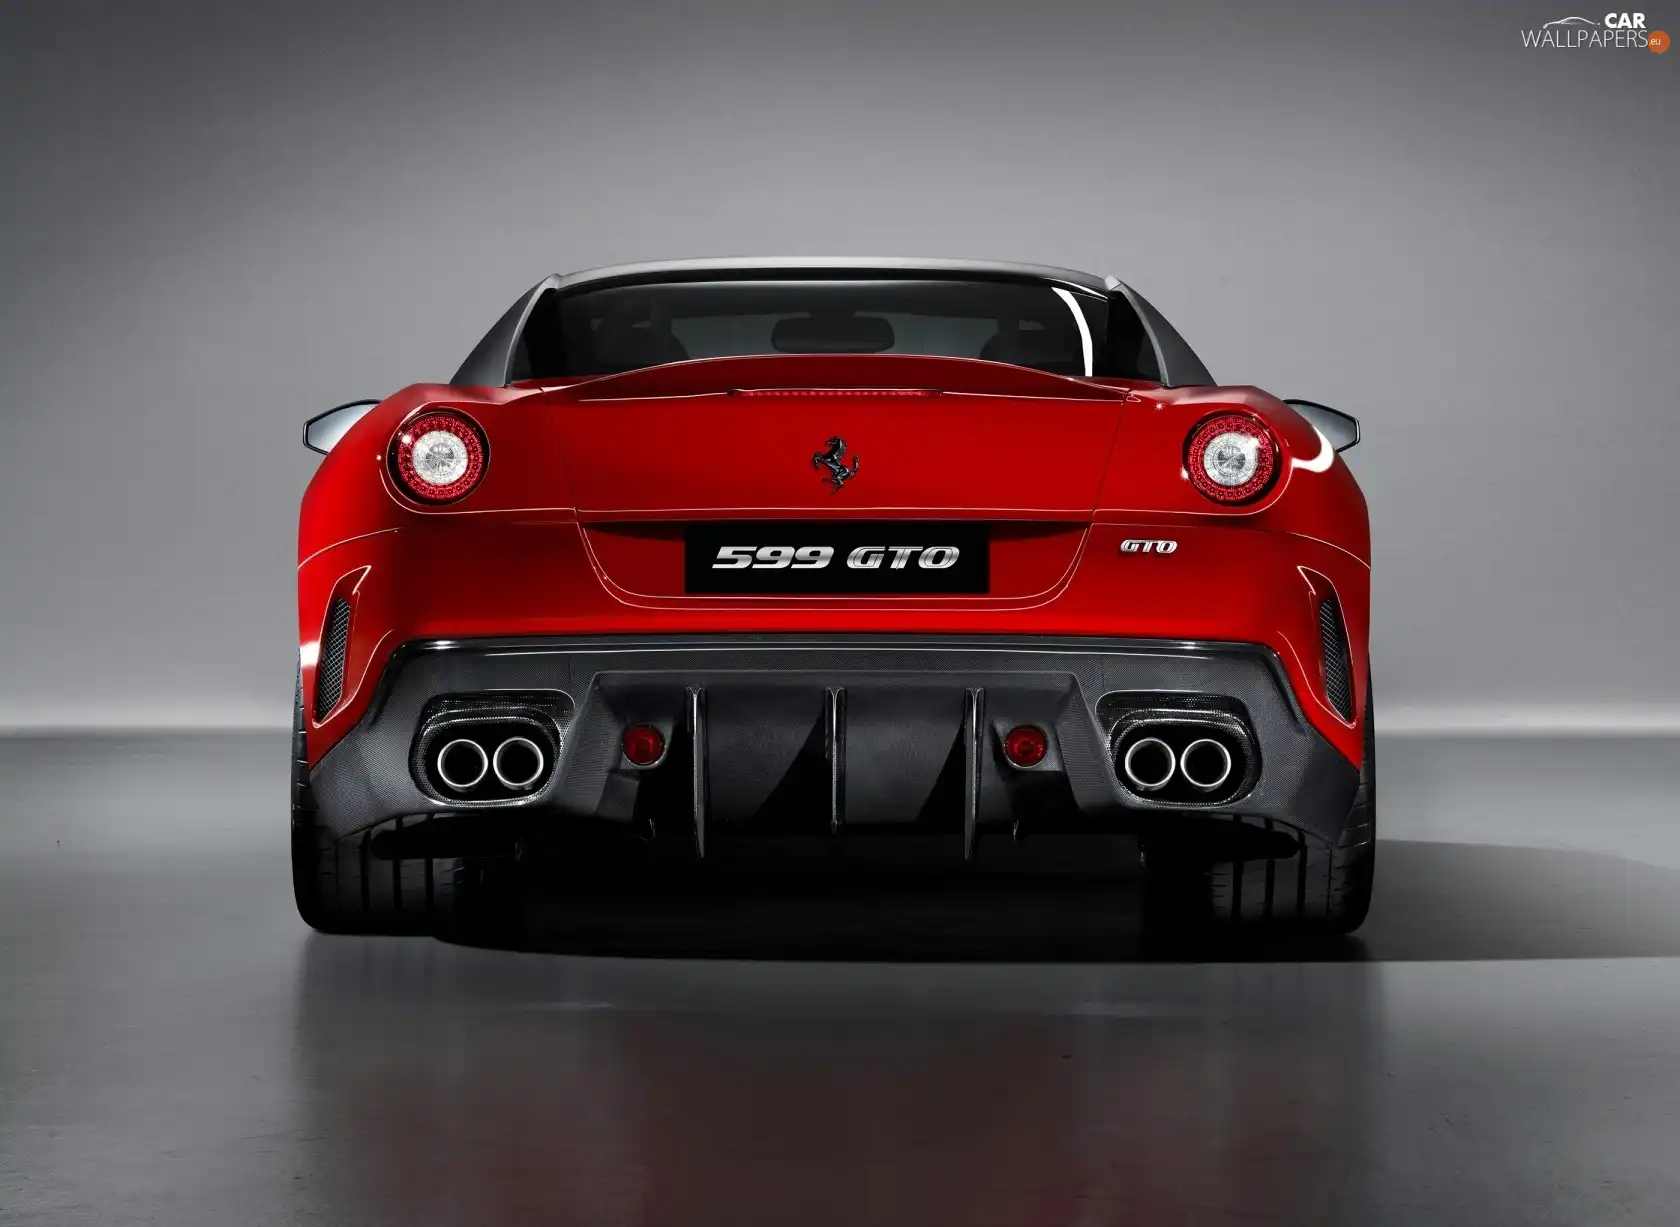 Ferrari 599 GTO, Red, motor car